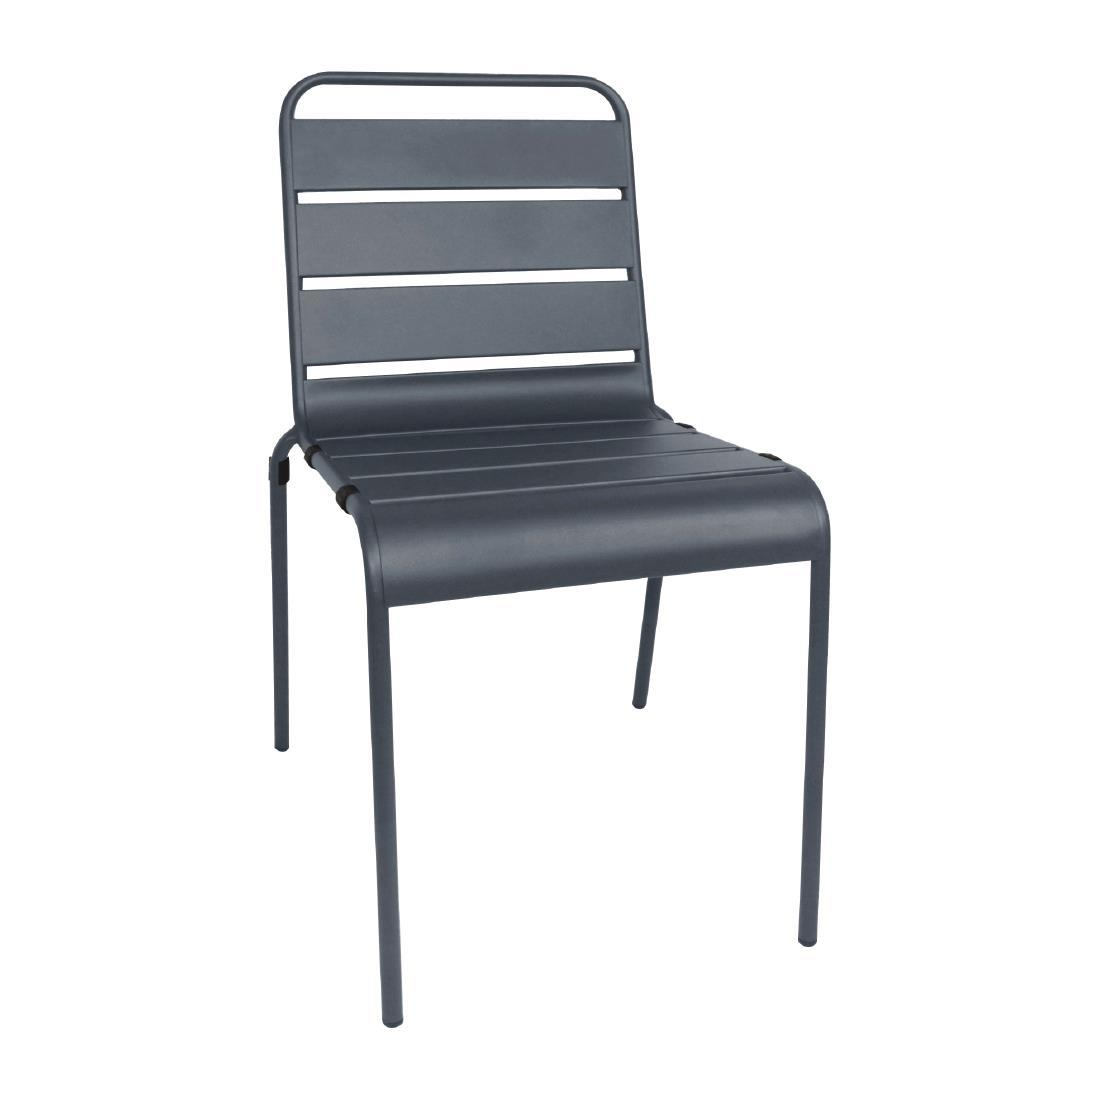 Bolero Slatted Steel Side Chairs Grey (Pack of 4) - CS727  - 2